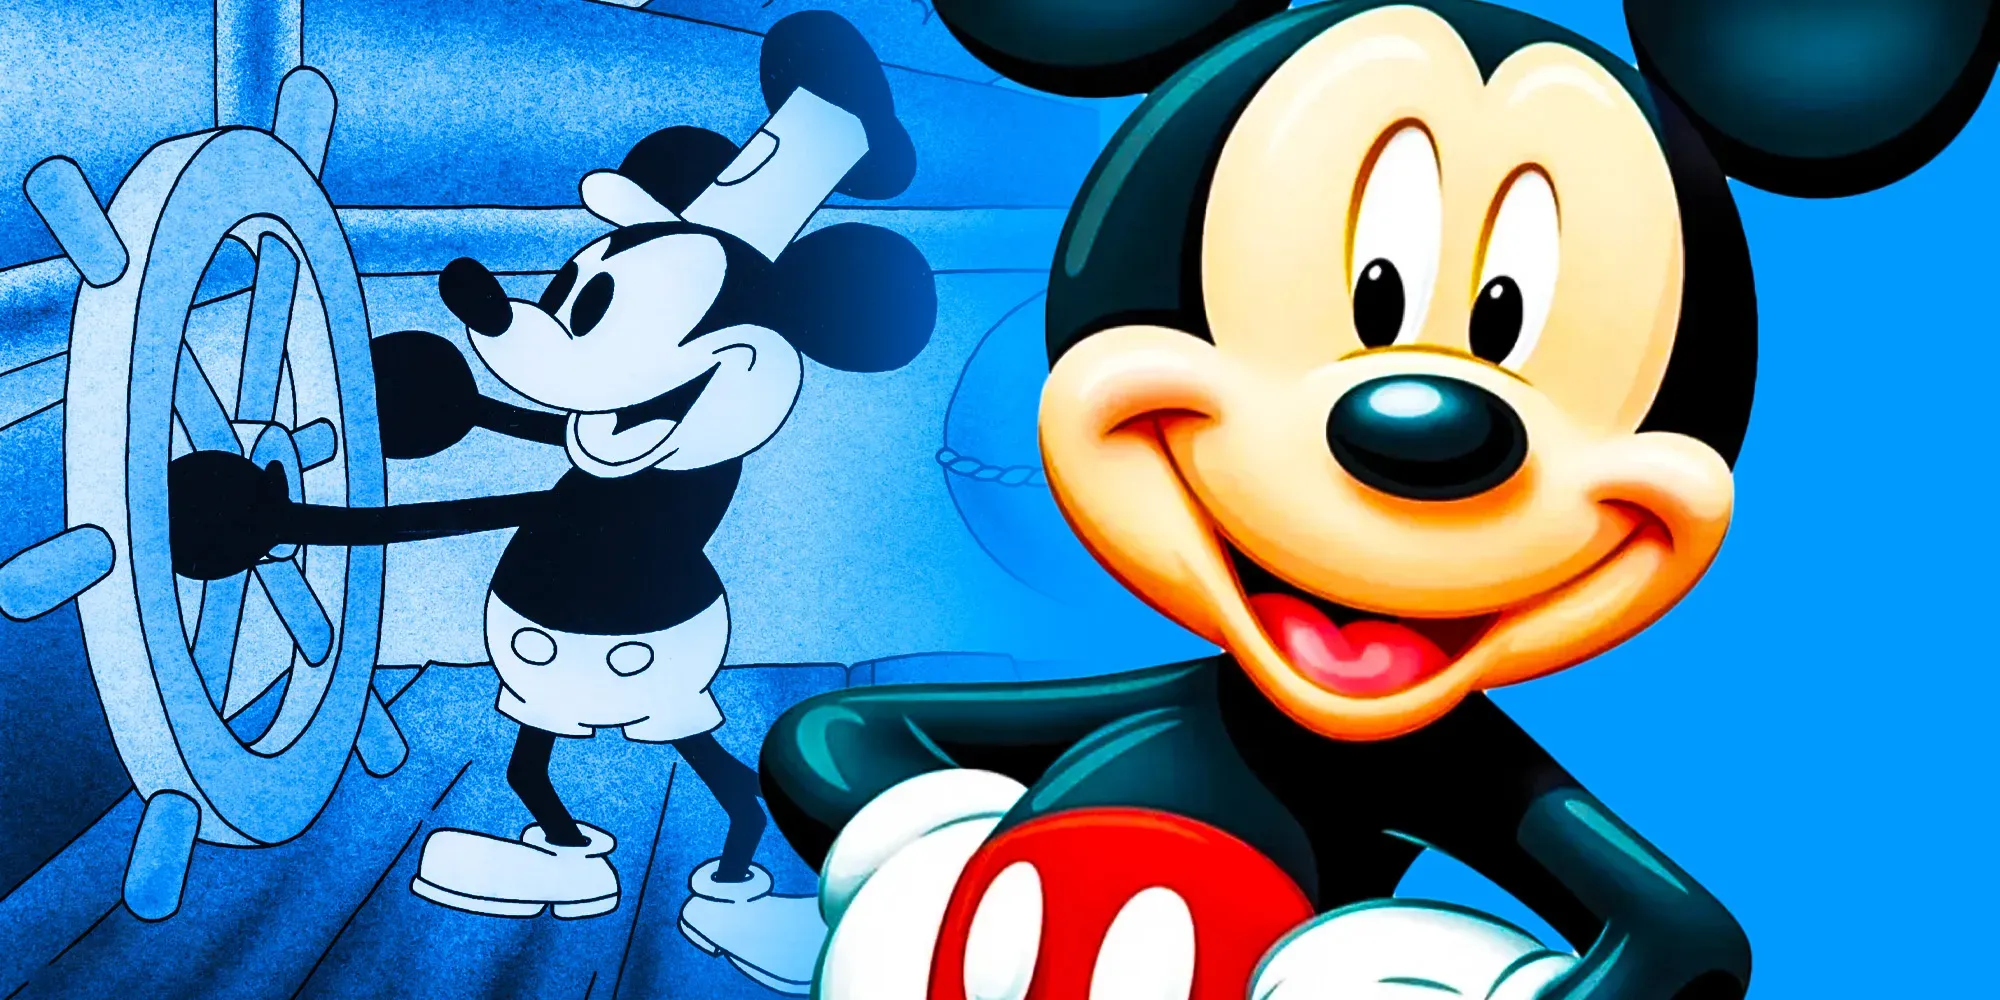 Mickey Mouse Funhouse (TV Series 2021– ) - IMDb